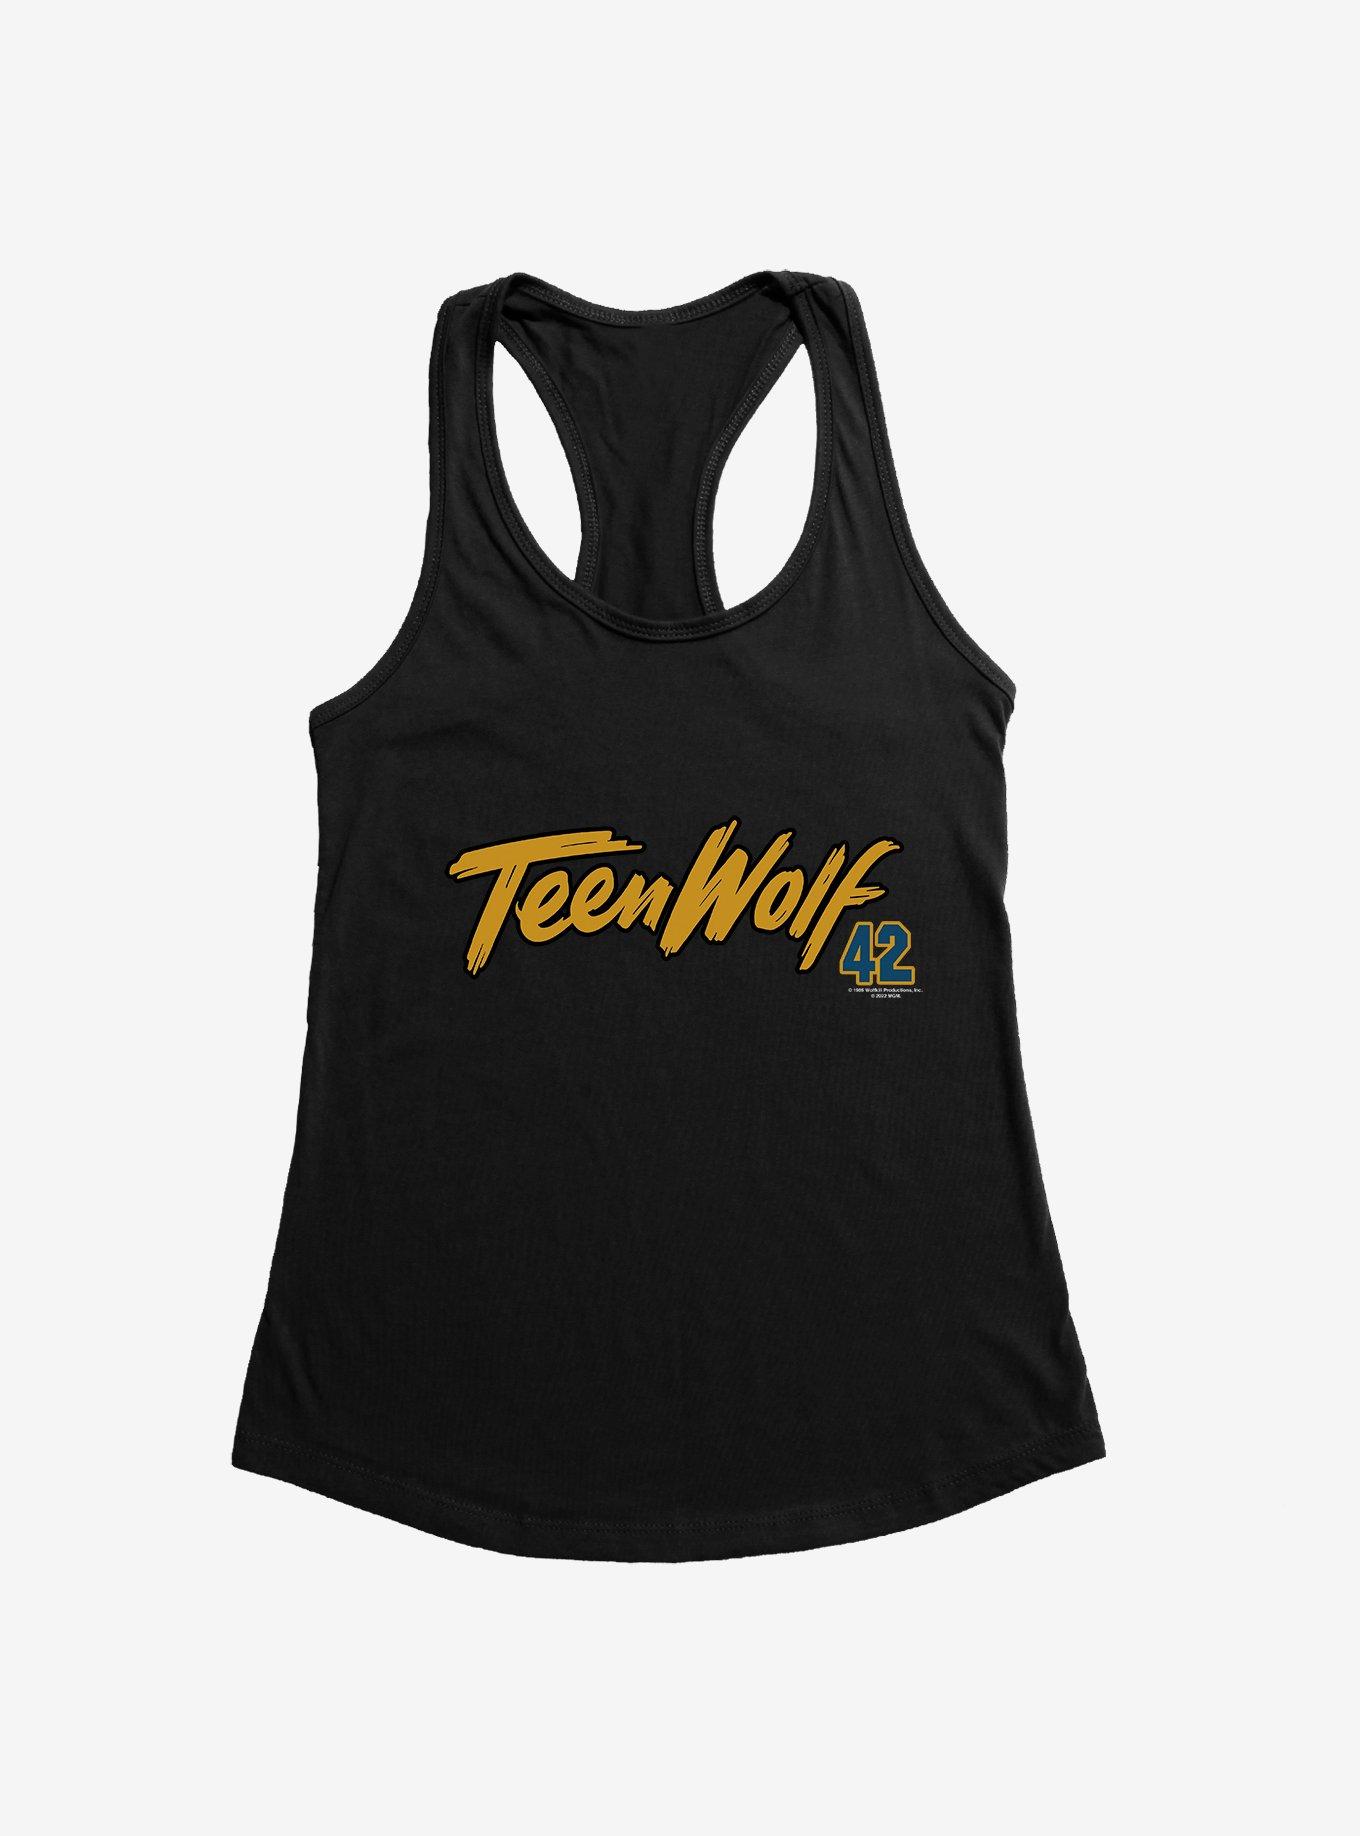 Teen Wolf TeenWolf 42 Womens Tank Top, BLACK, hi-res